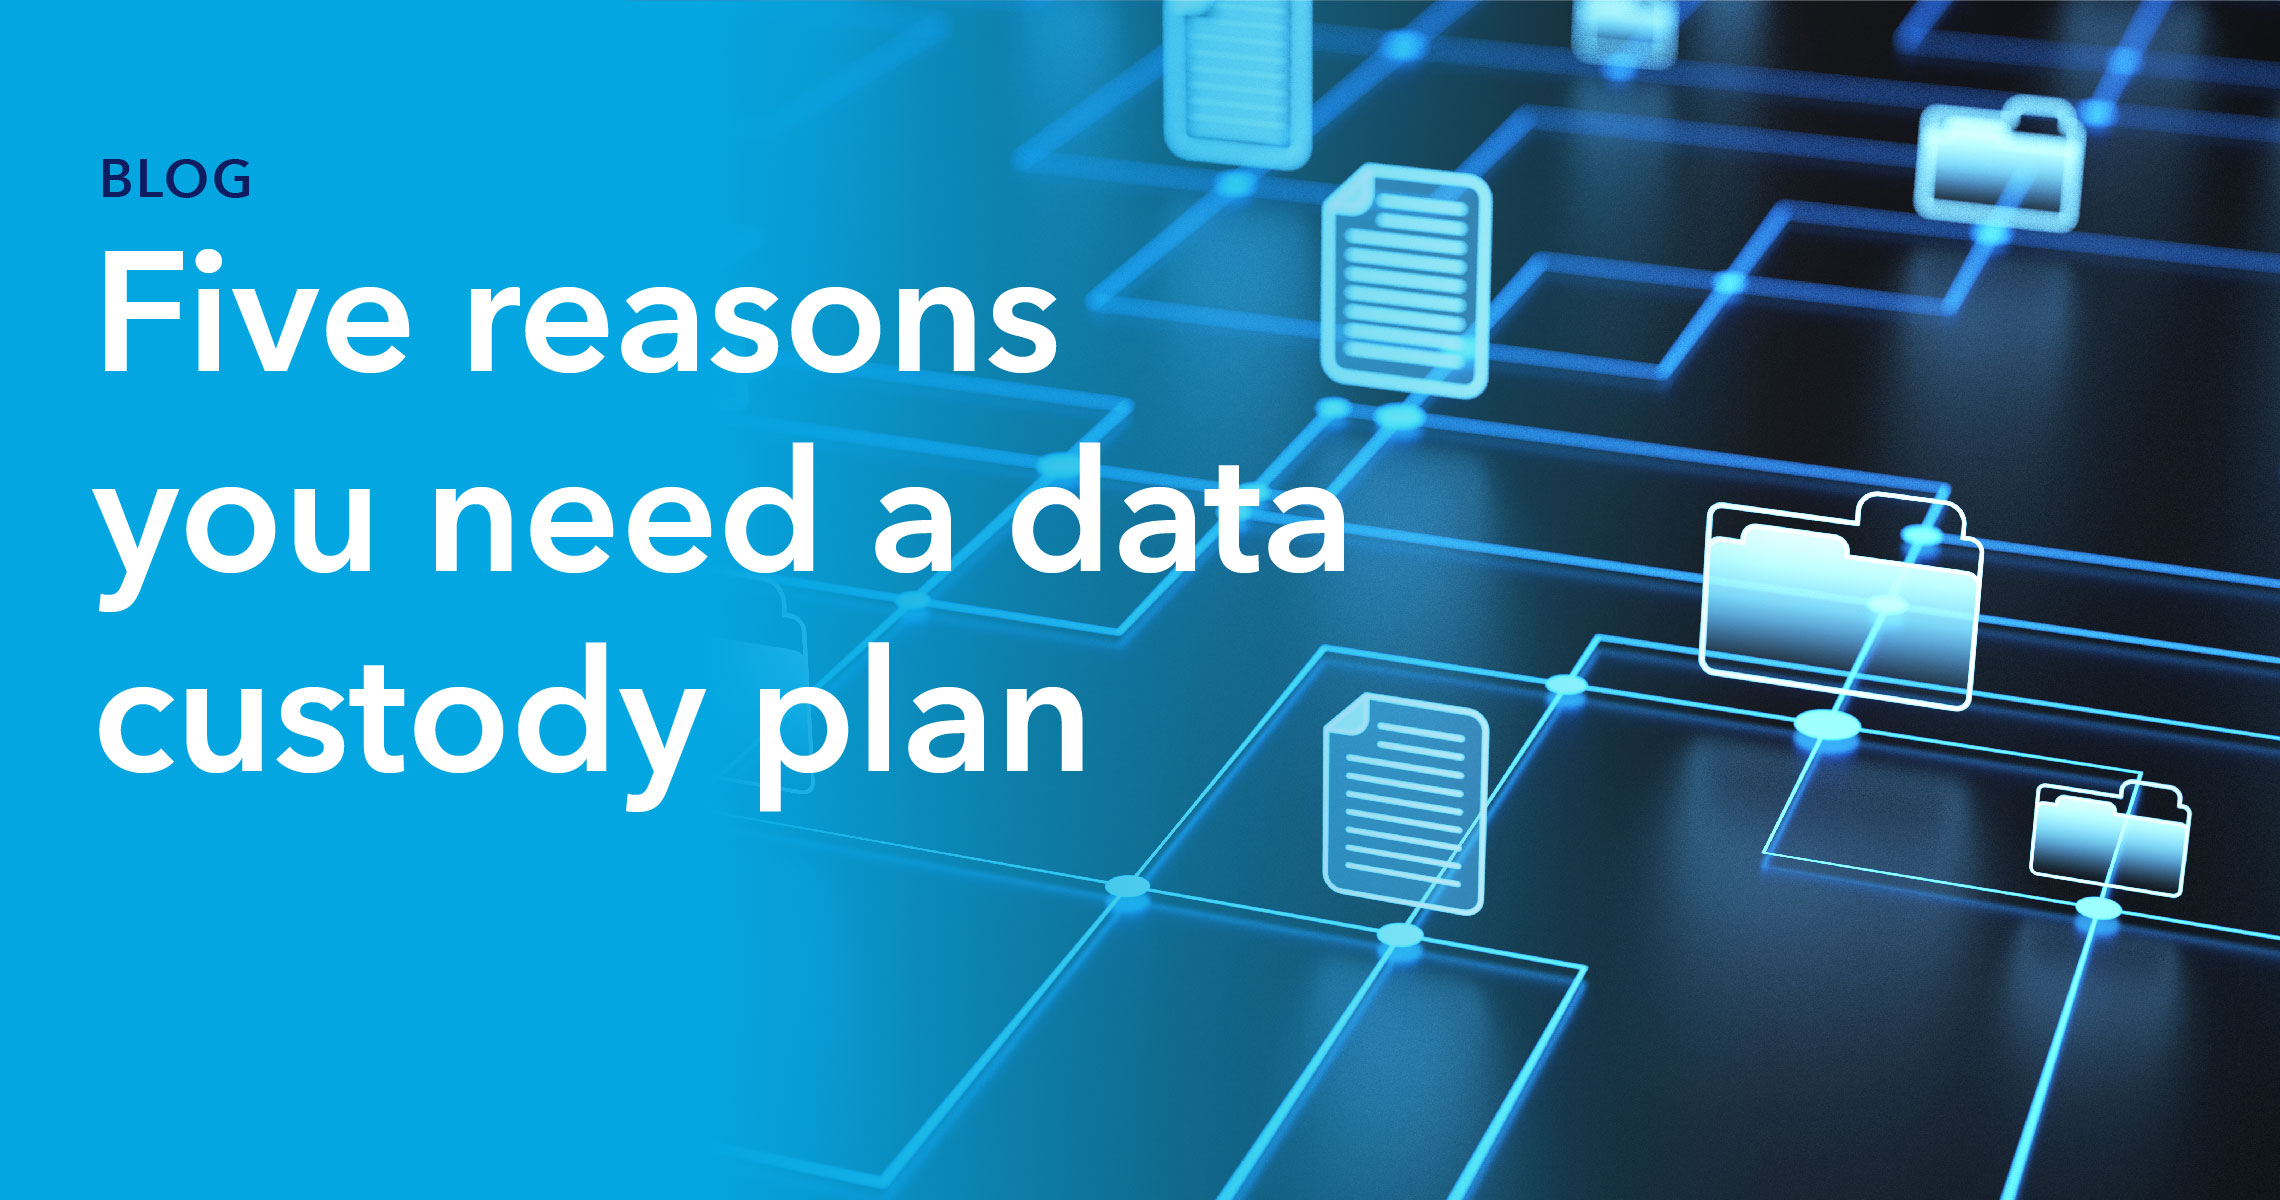 Blog header - 5 reasons you need a data custody plan